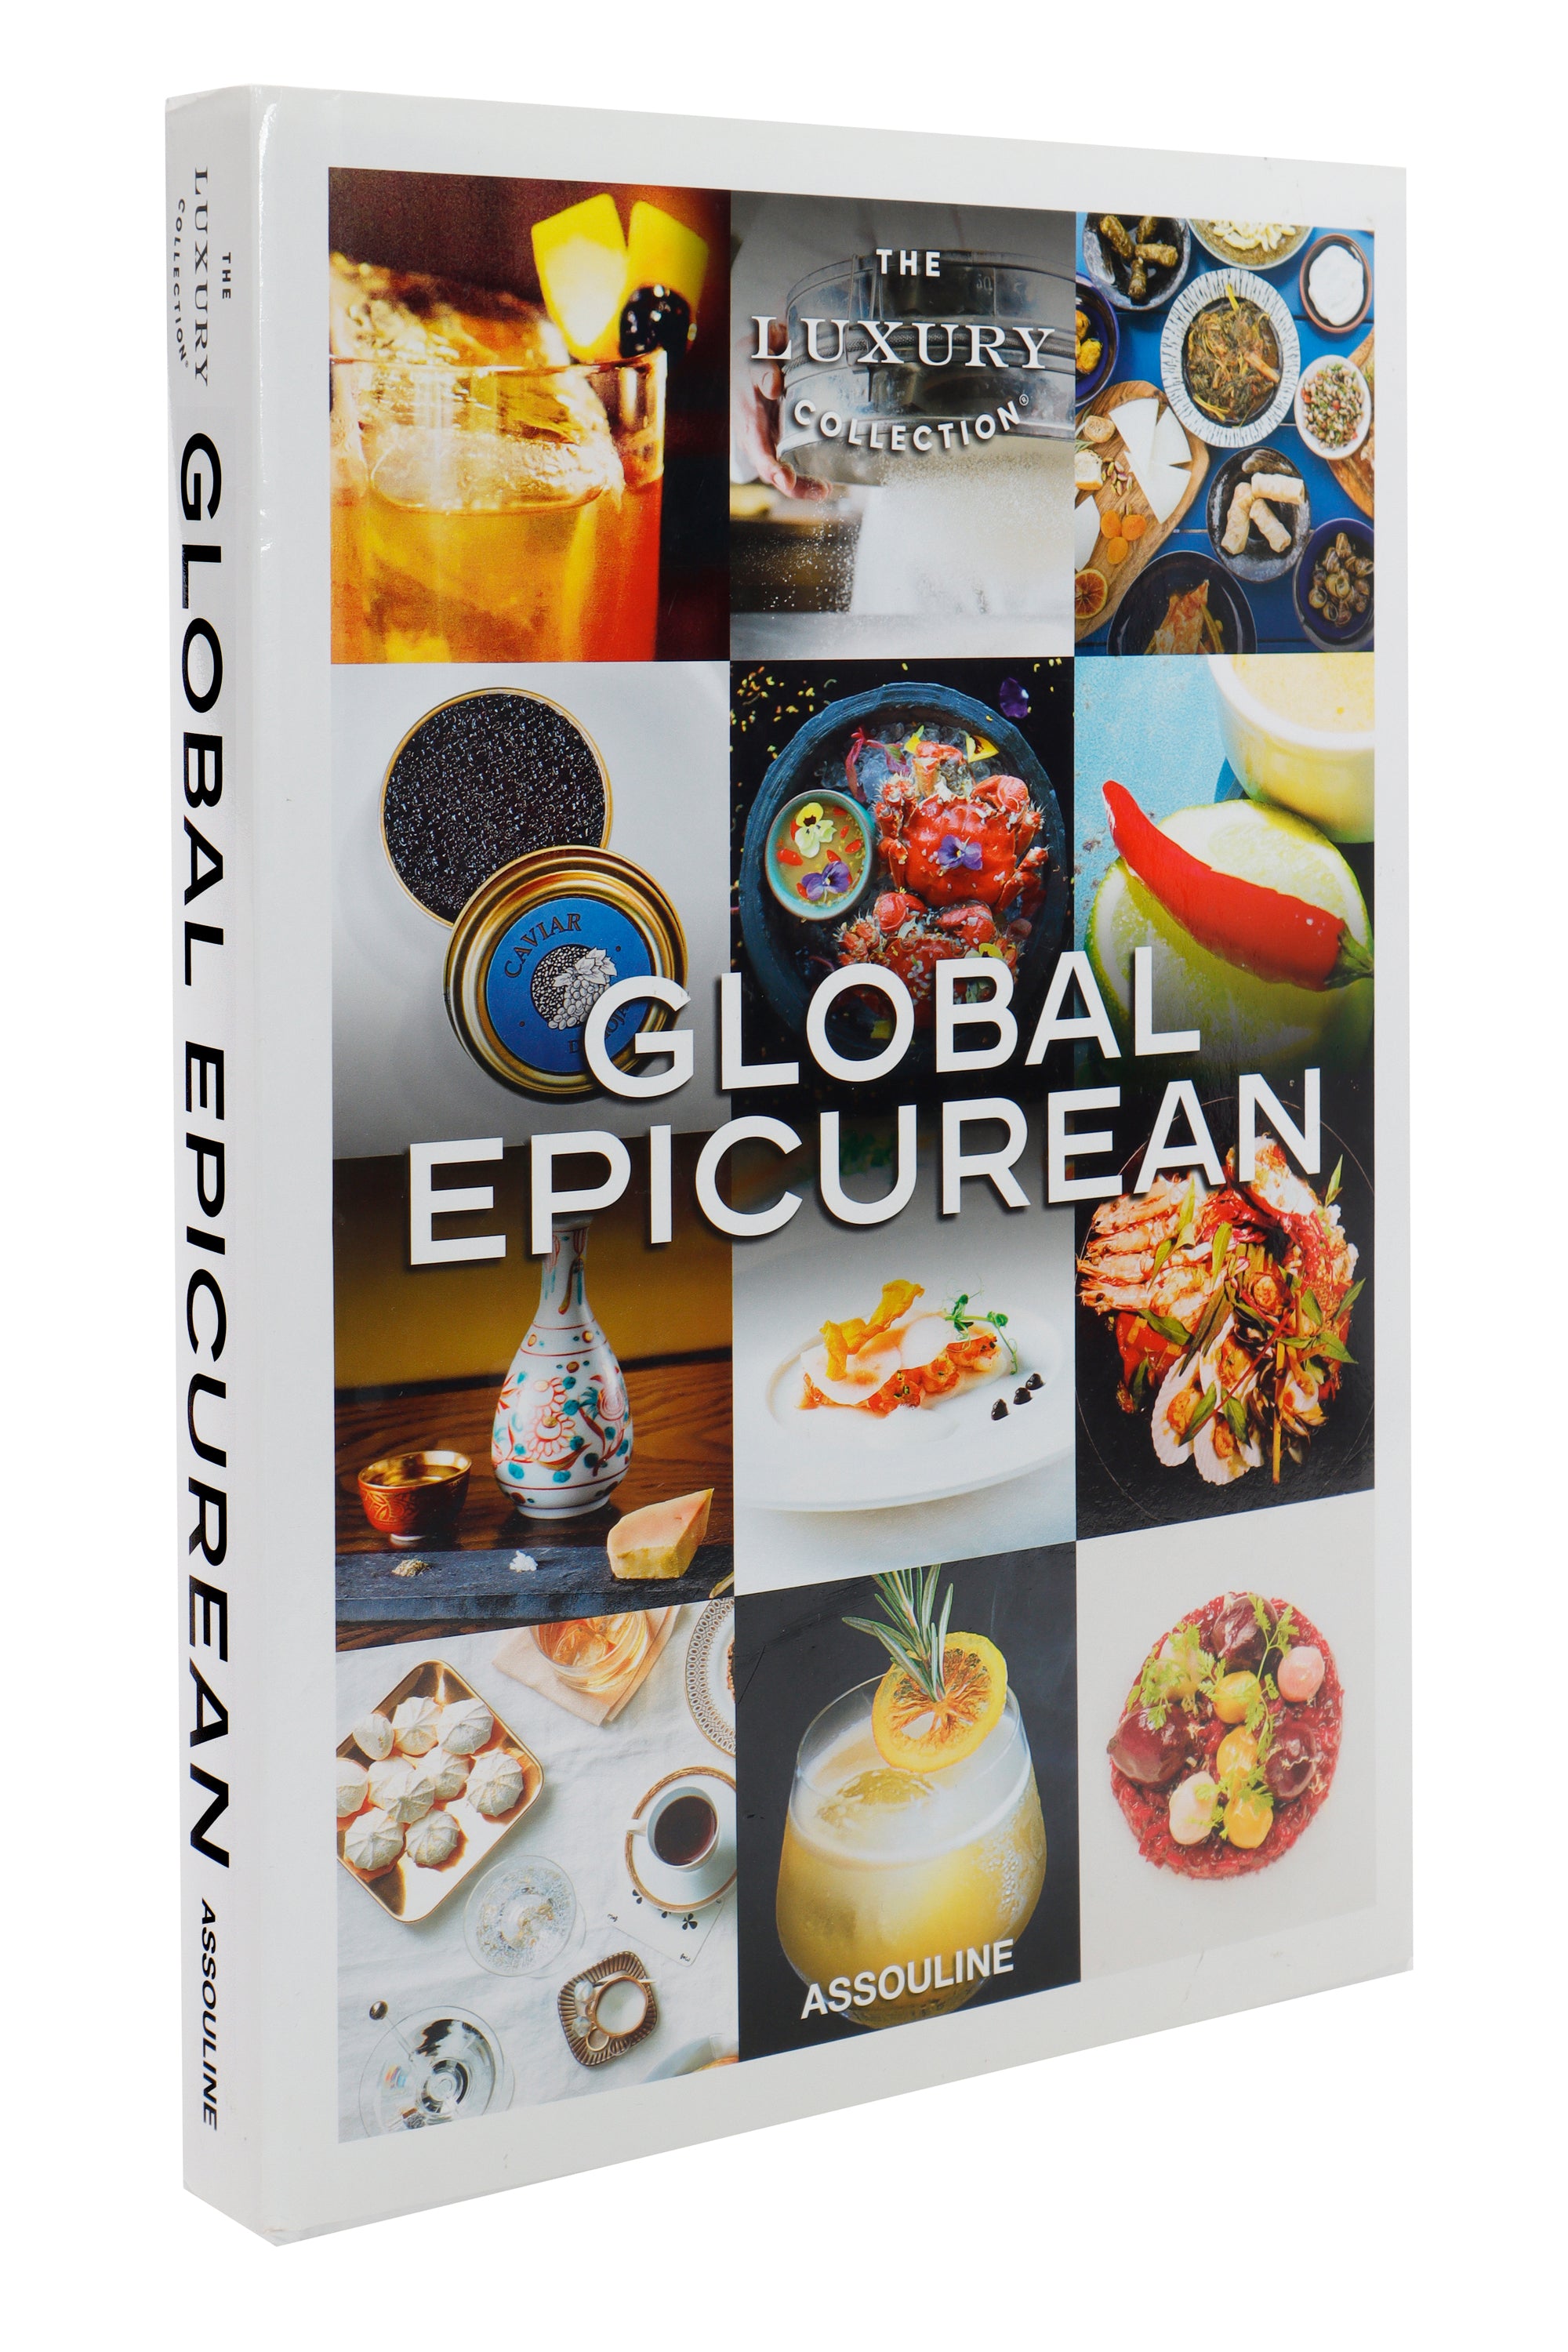 The Luxury Collection : Global Epicurean - Joshua David Stein